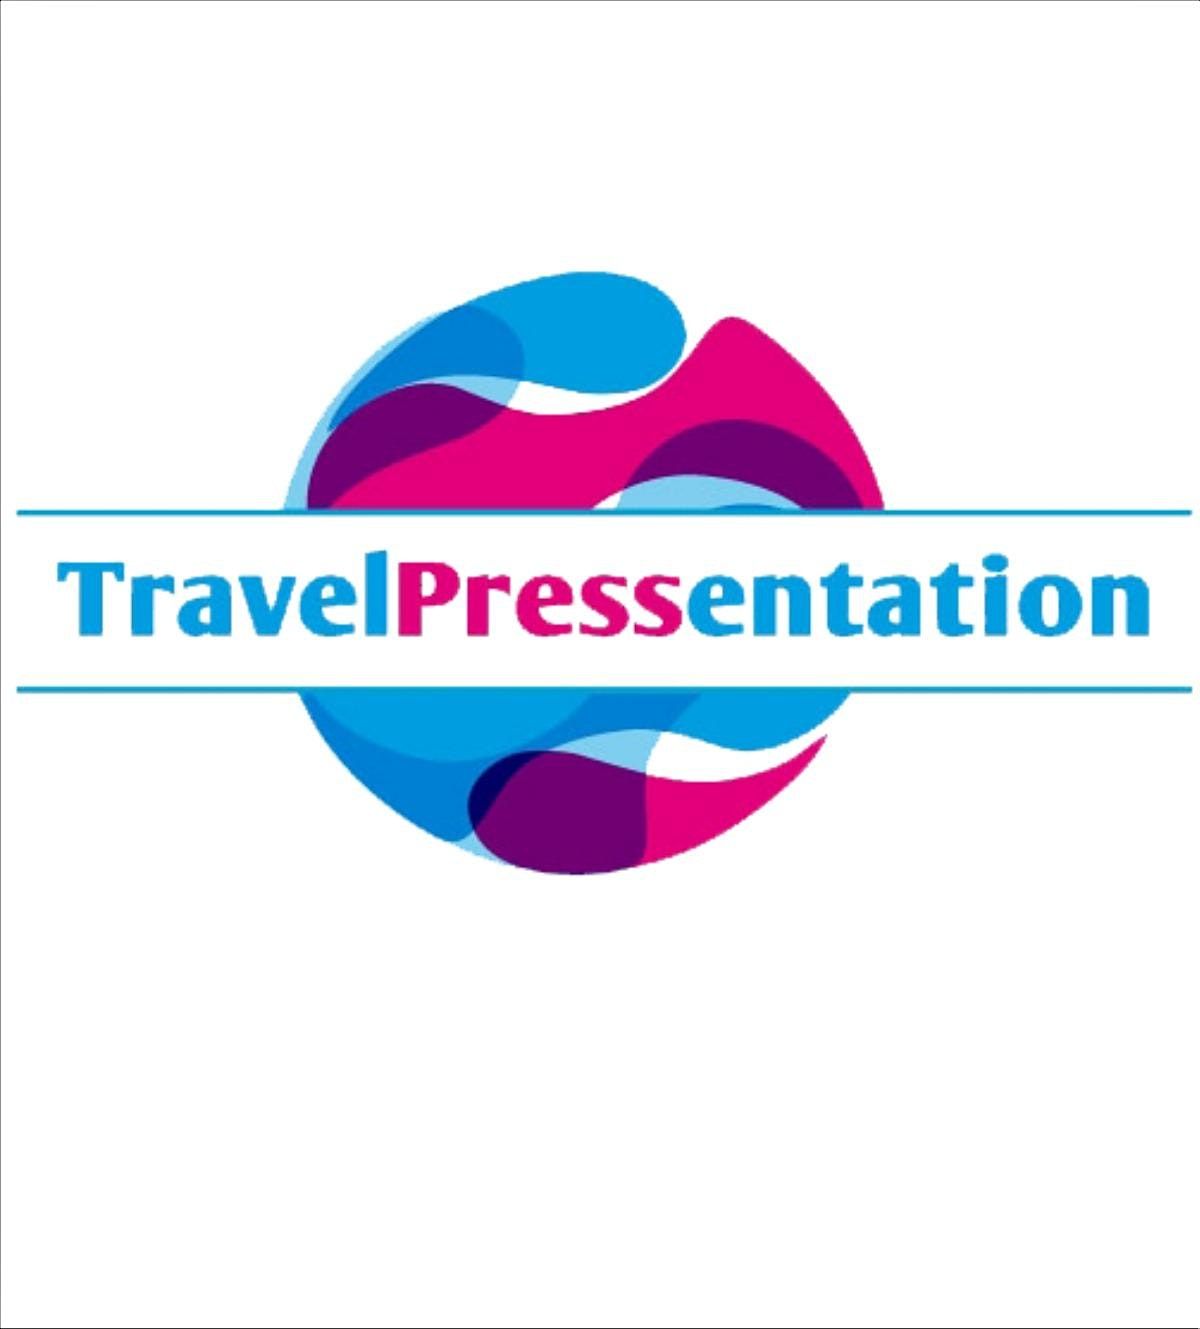 TravelPRessentation - reismedia workshop - 4 november 2021